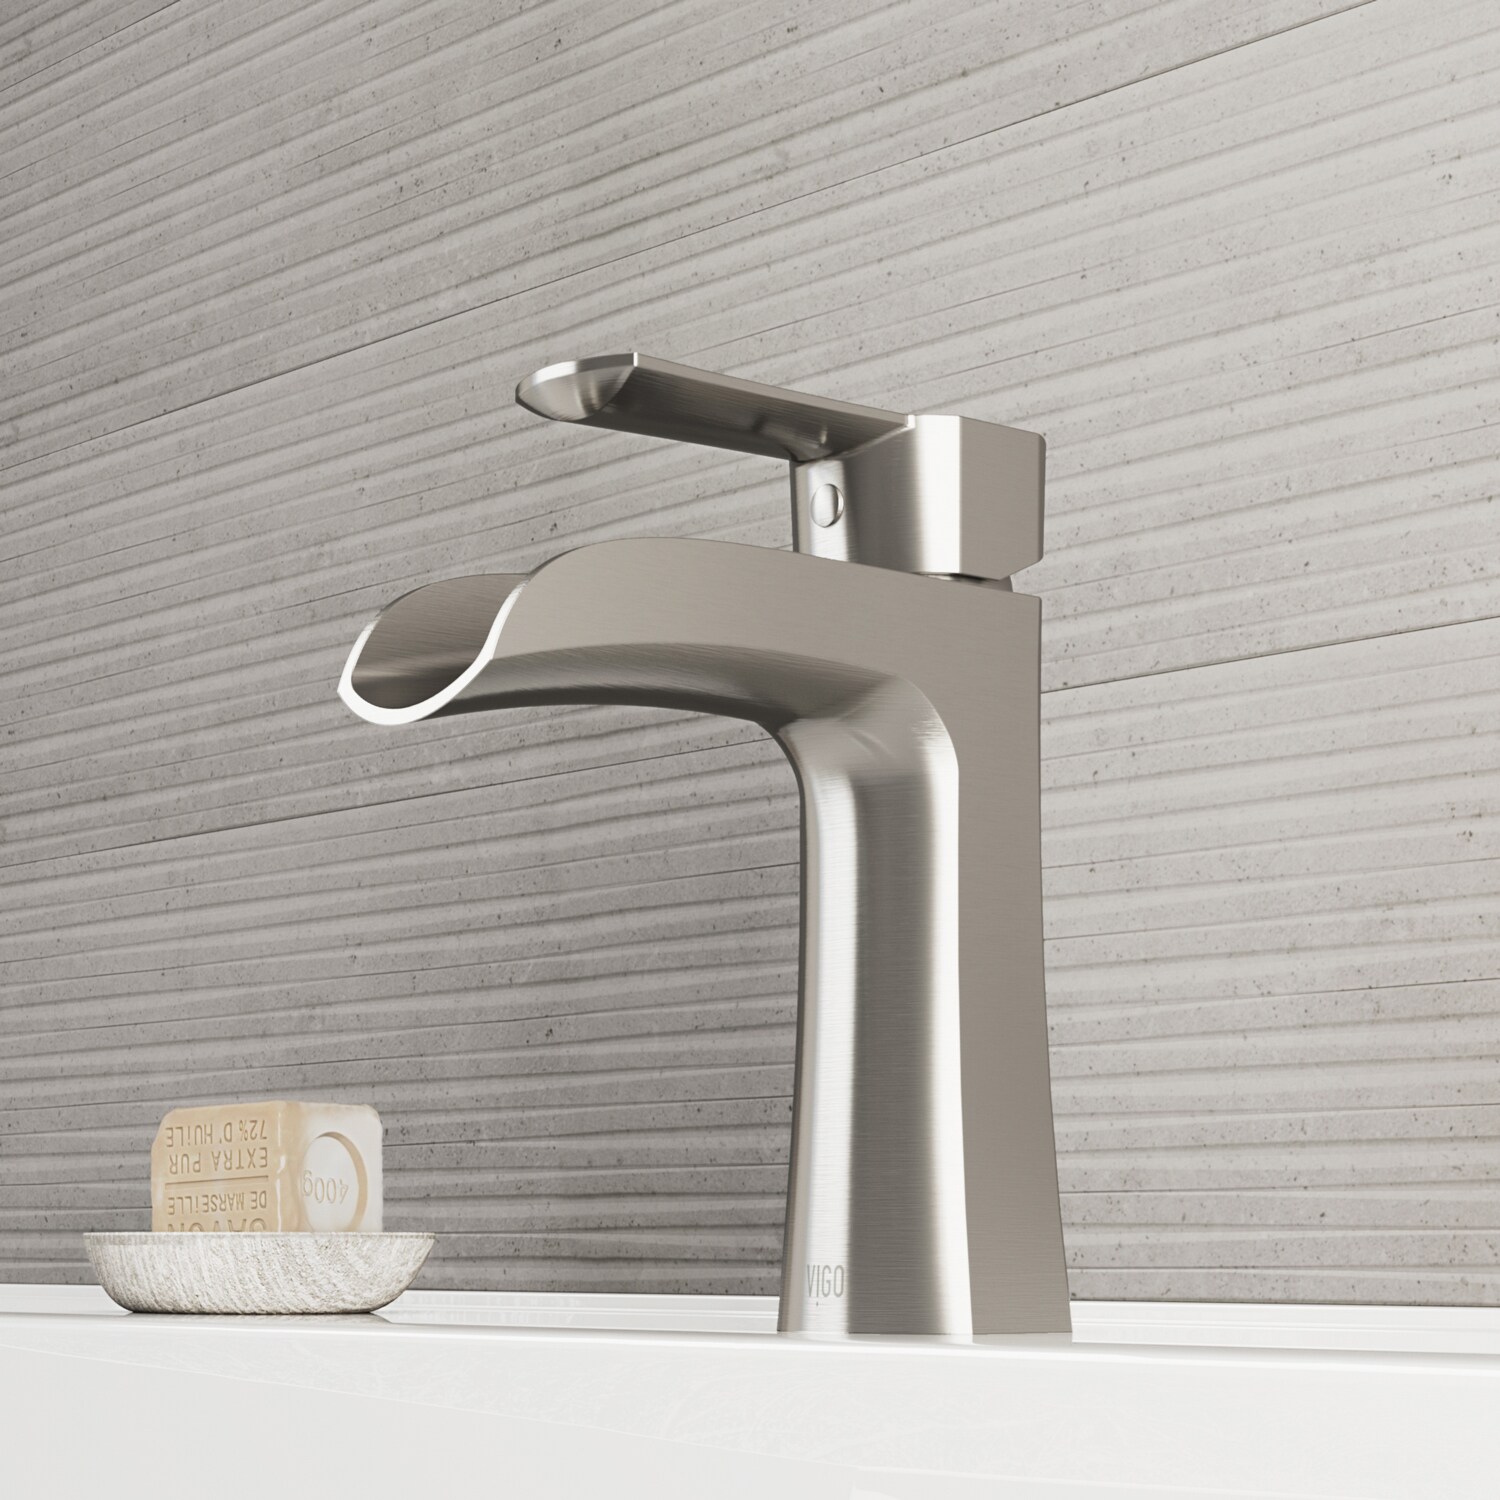 VIGO Paloma Brushed Nickel 1-handle Single Hole WaterSense Waterfall Bathroom Sink Faucet